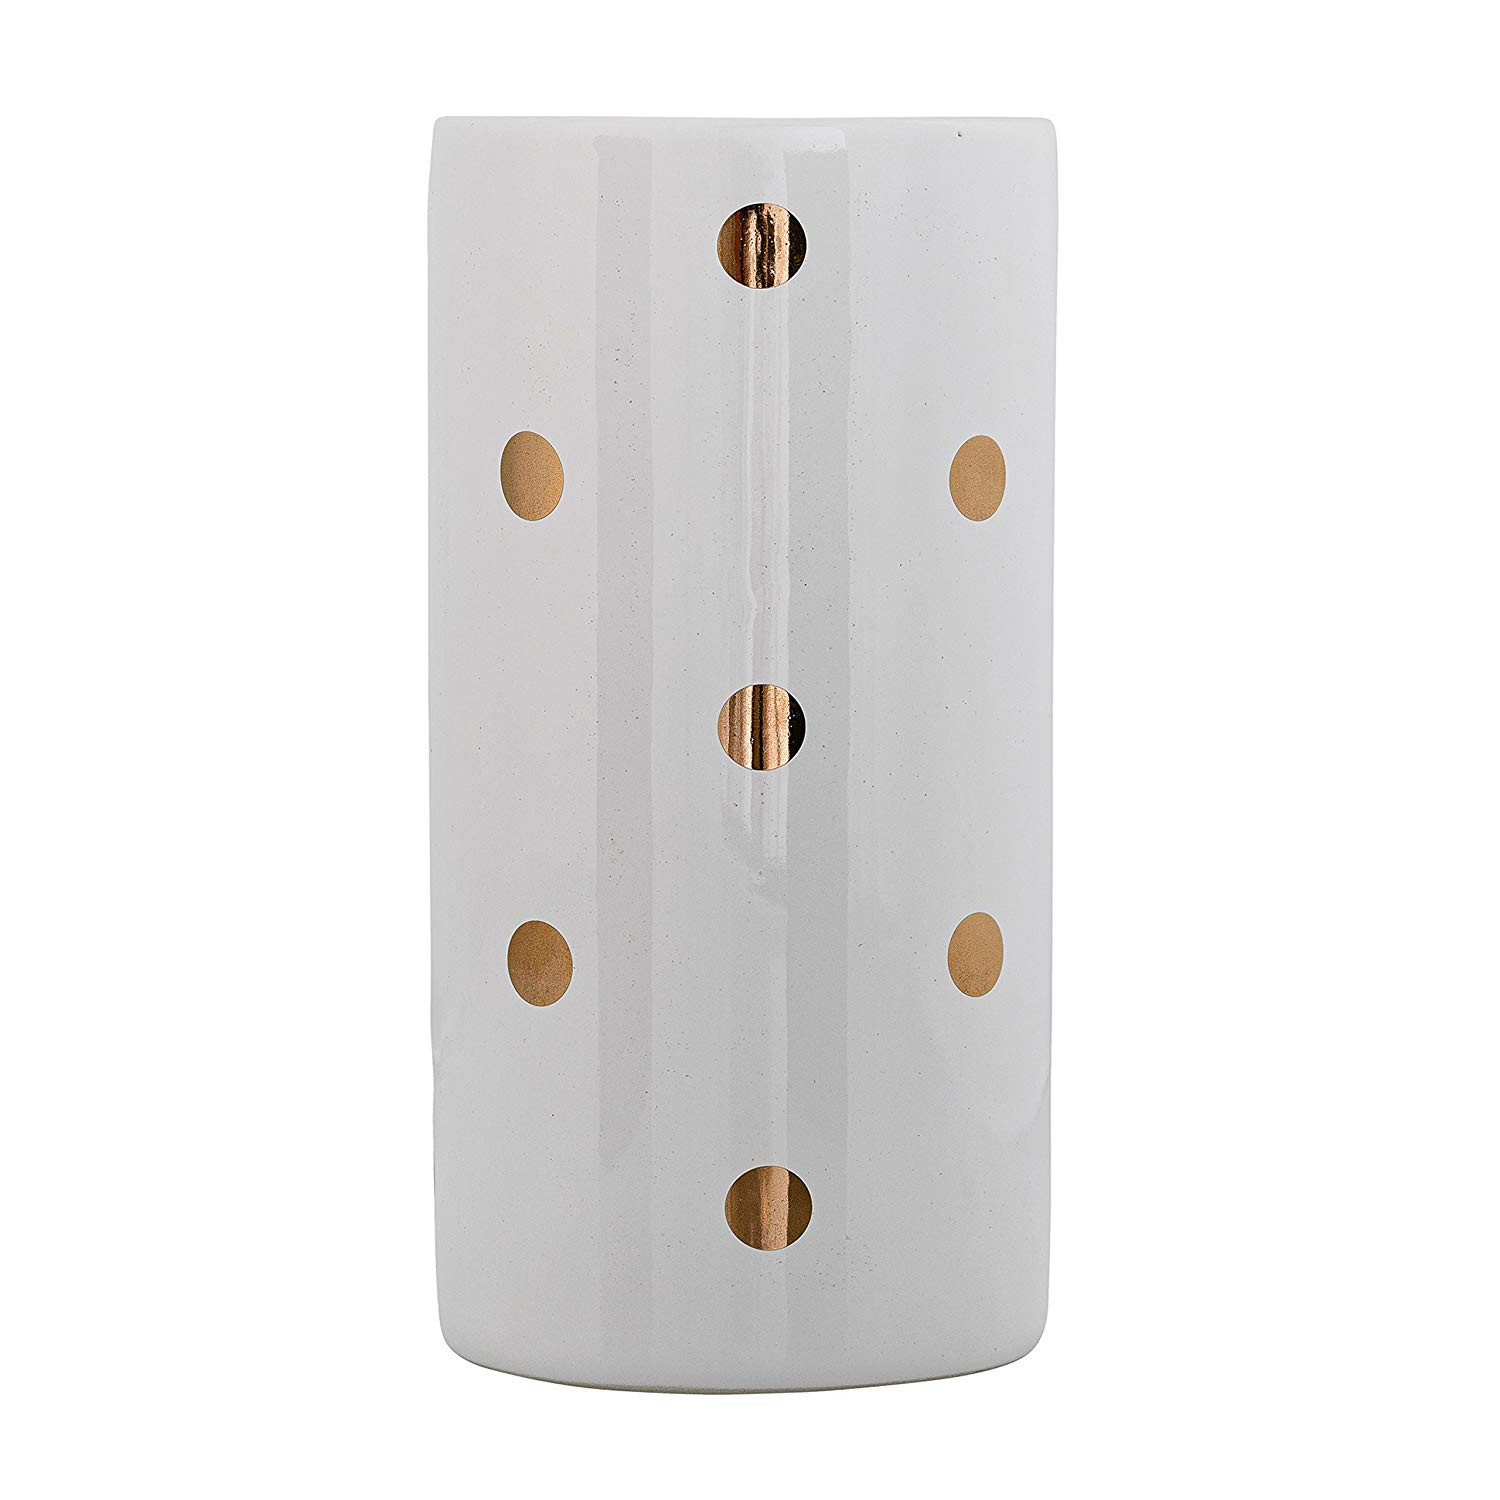 plastic trumpet vases wholesale of amazon com white ceramic vase with gold dots home kitchen pertaining to 812hps4biel sl1500